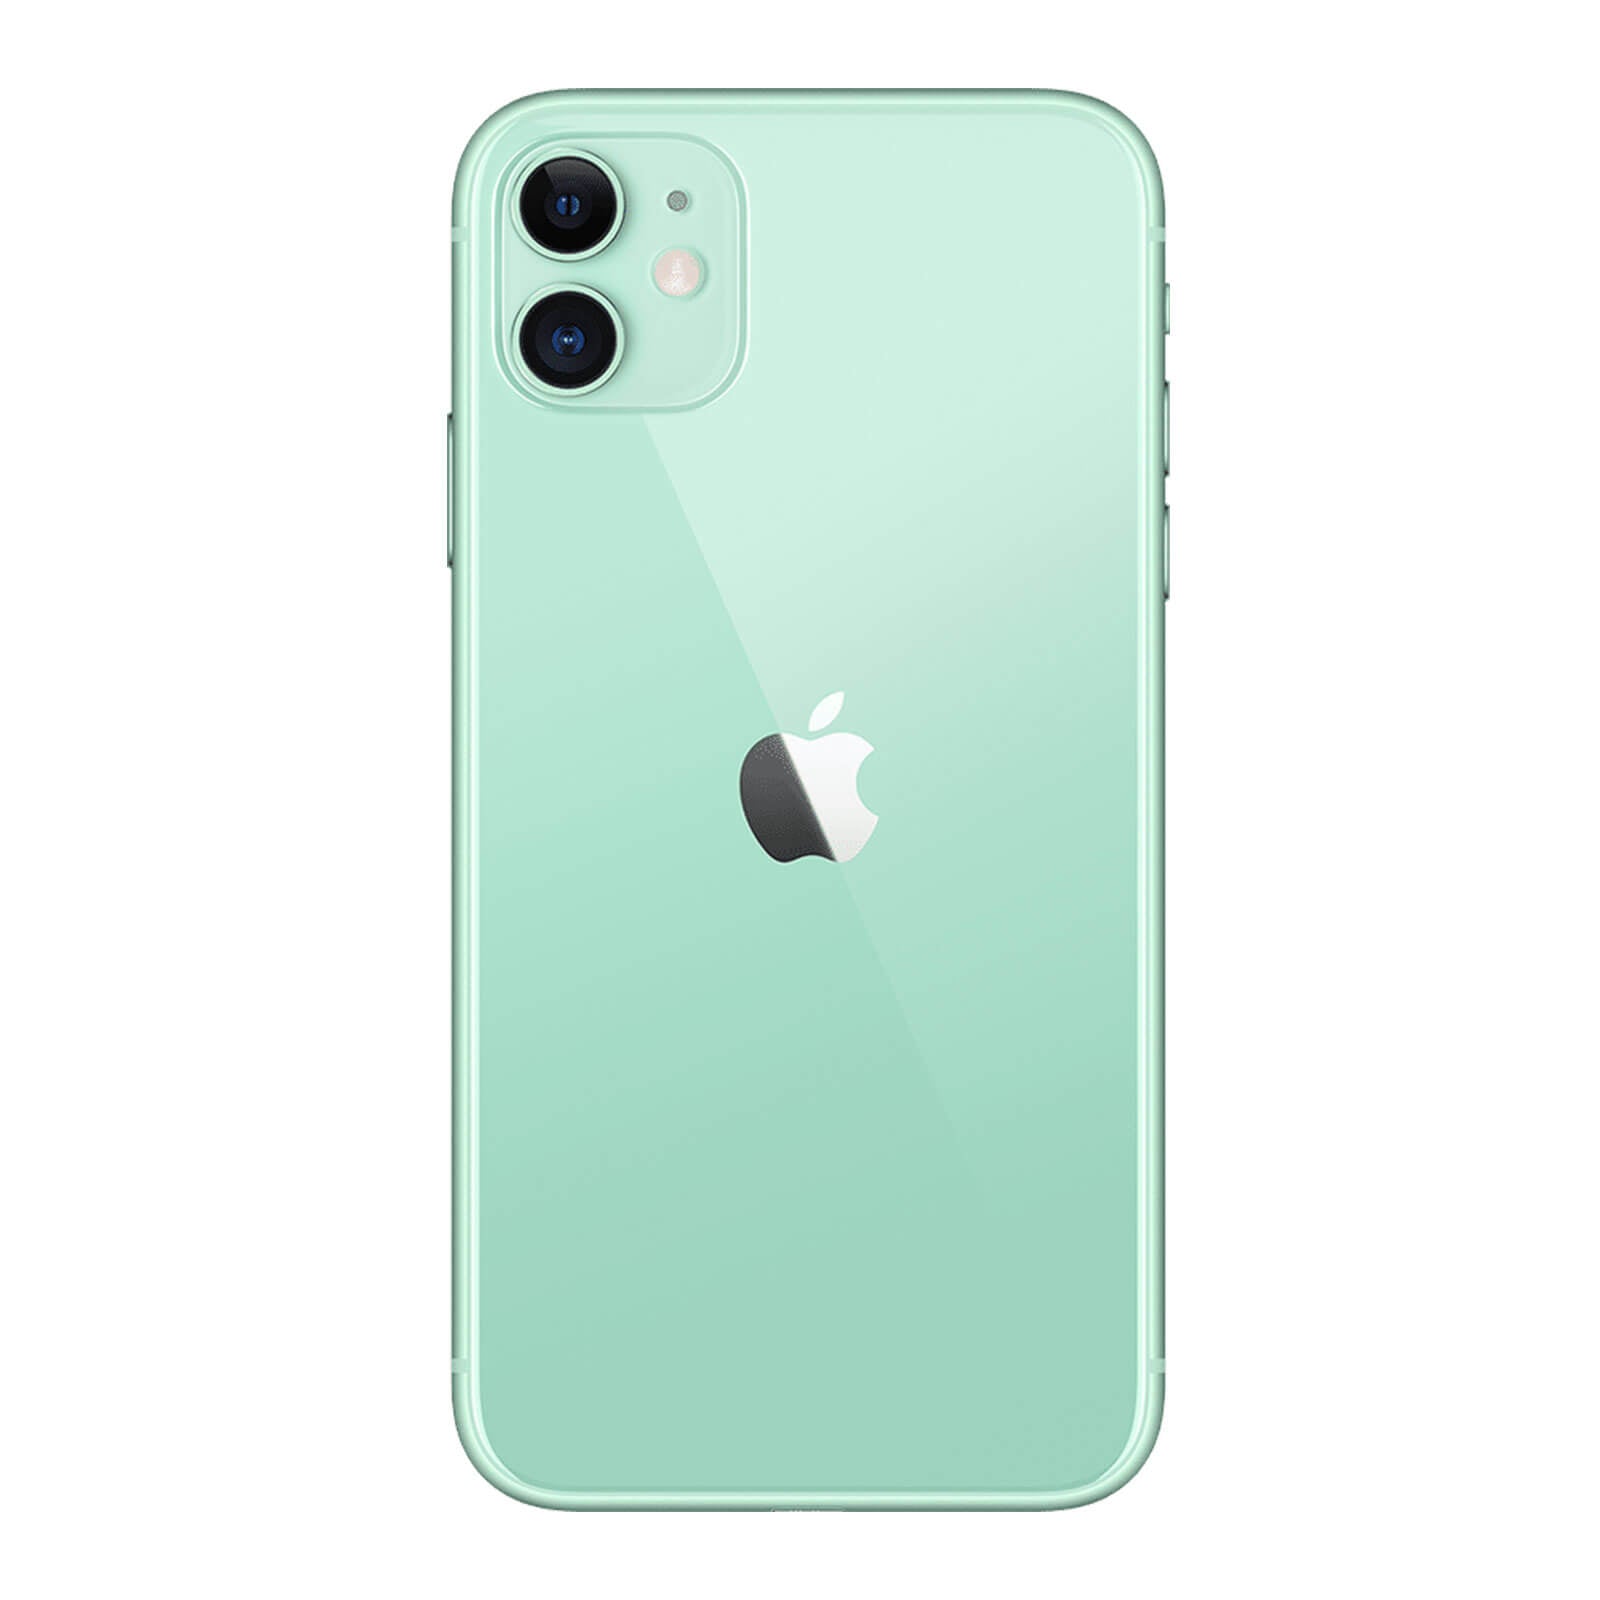 Apple iPhone 11 128GB Green Pristine - Verizon